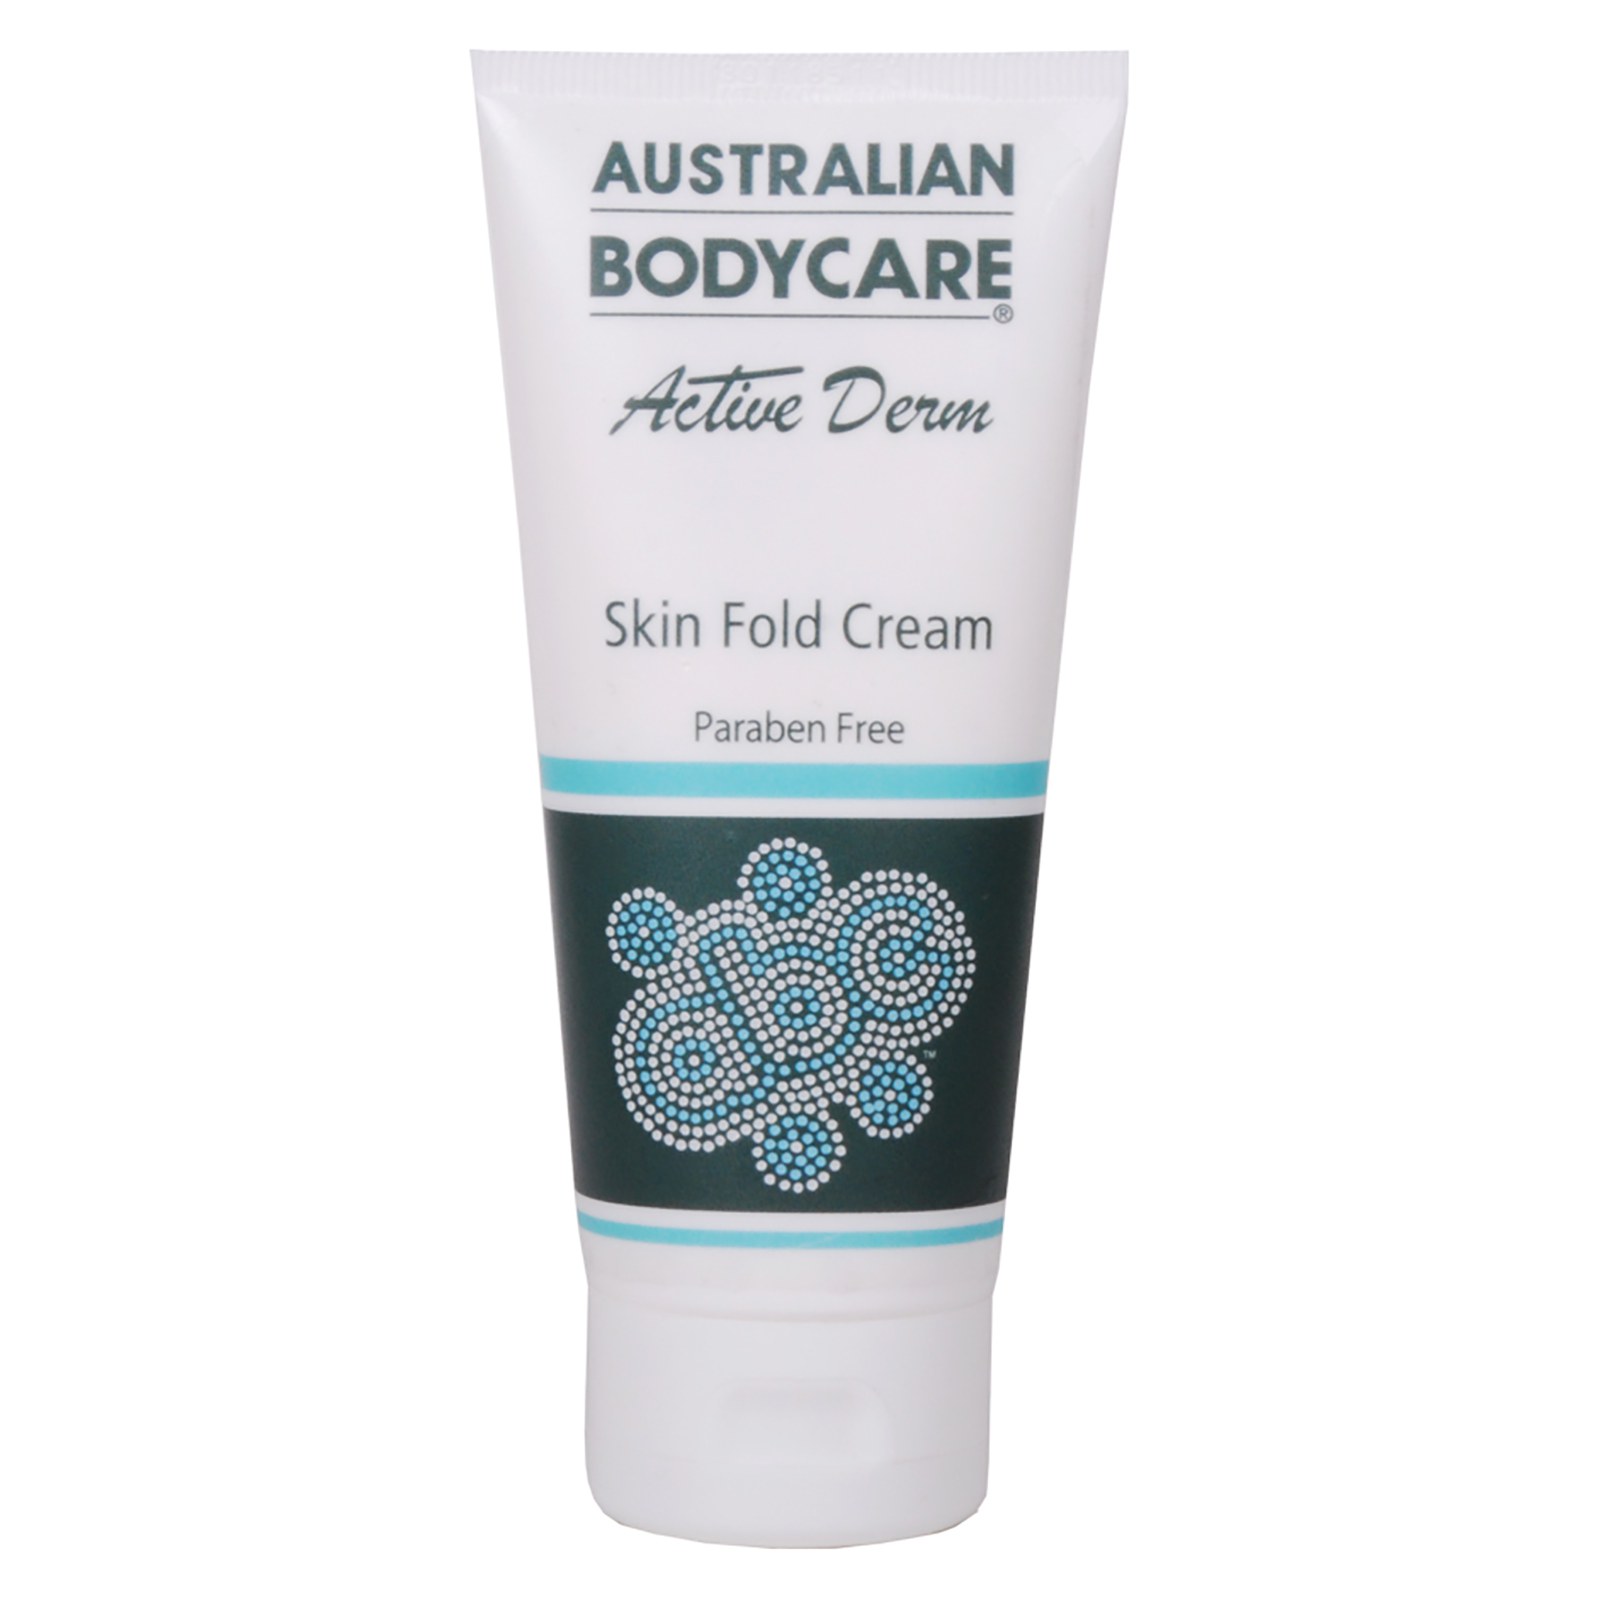 Active Derm Skin Fold Cream de Australian Bodycare (100 ml)